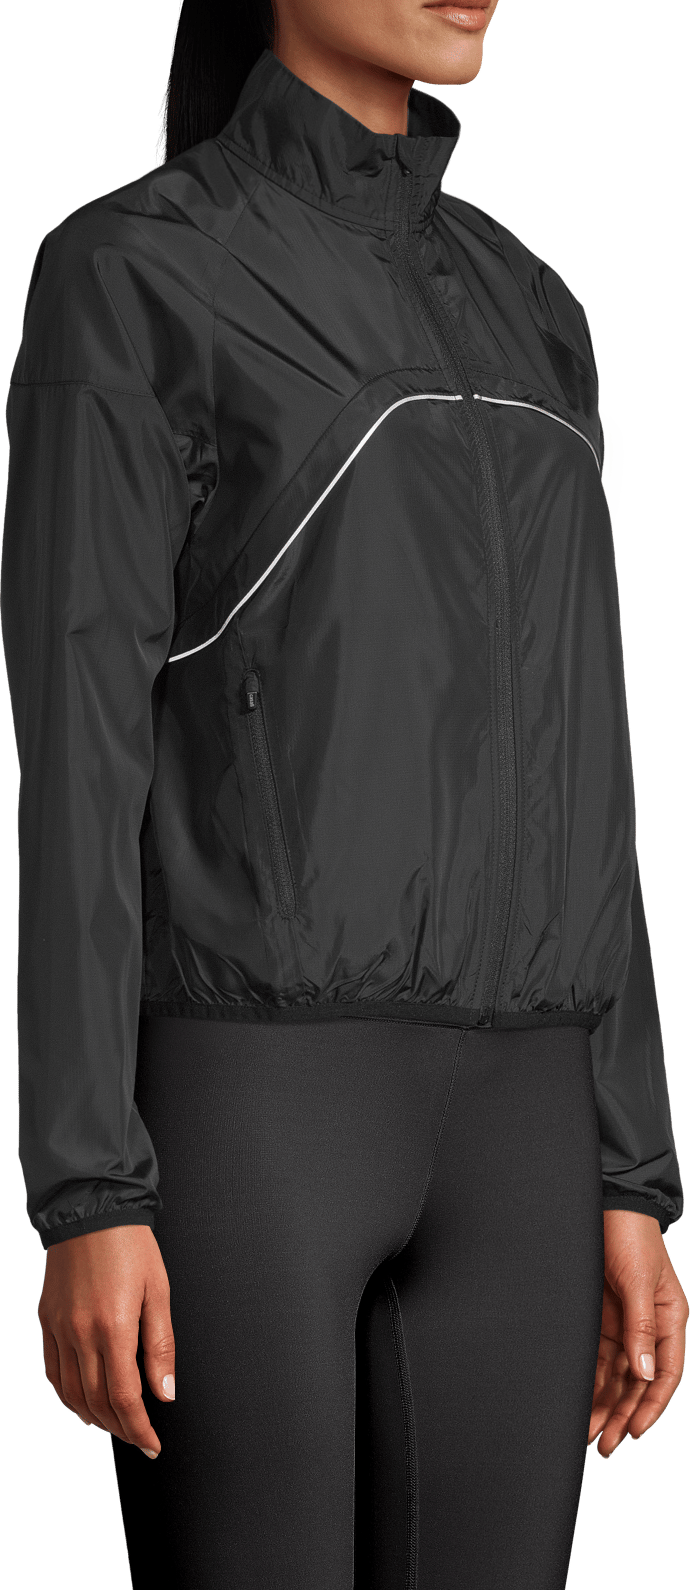 Women's Visible Wind Jacket Black Casall